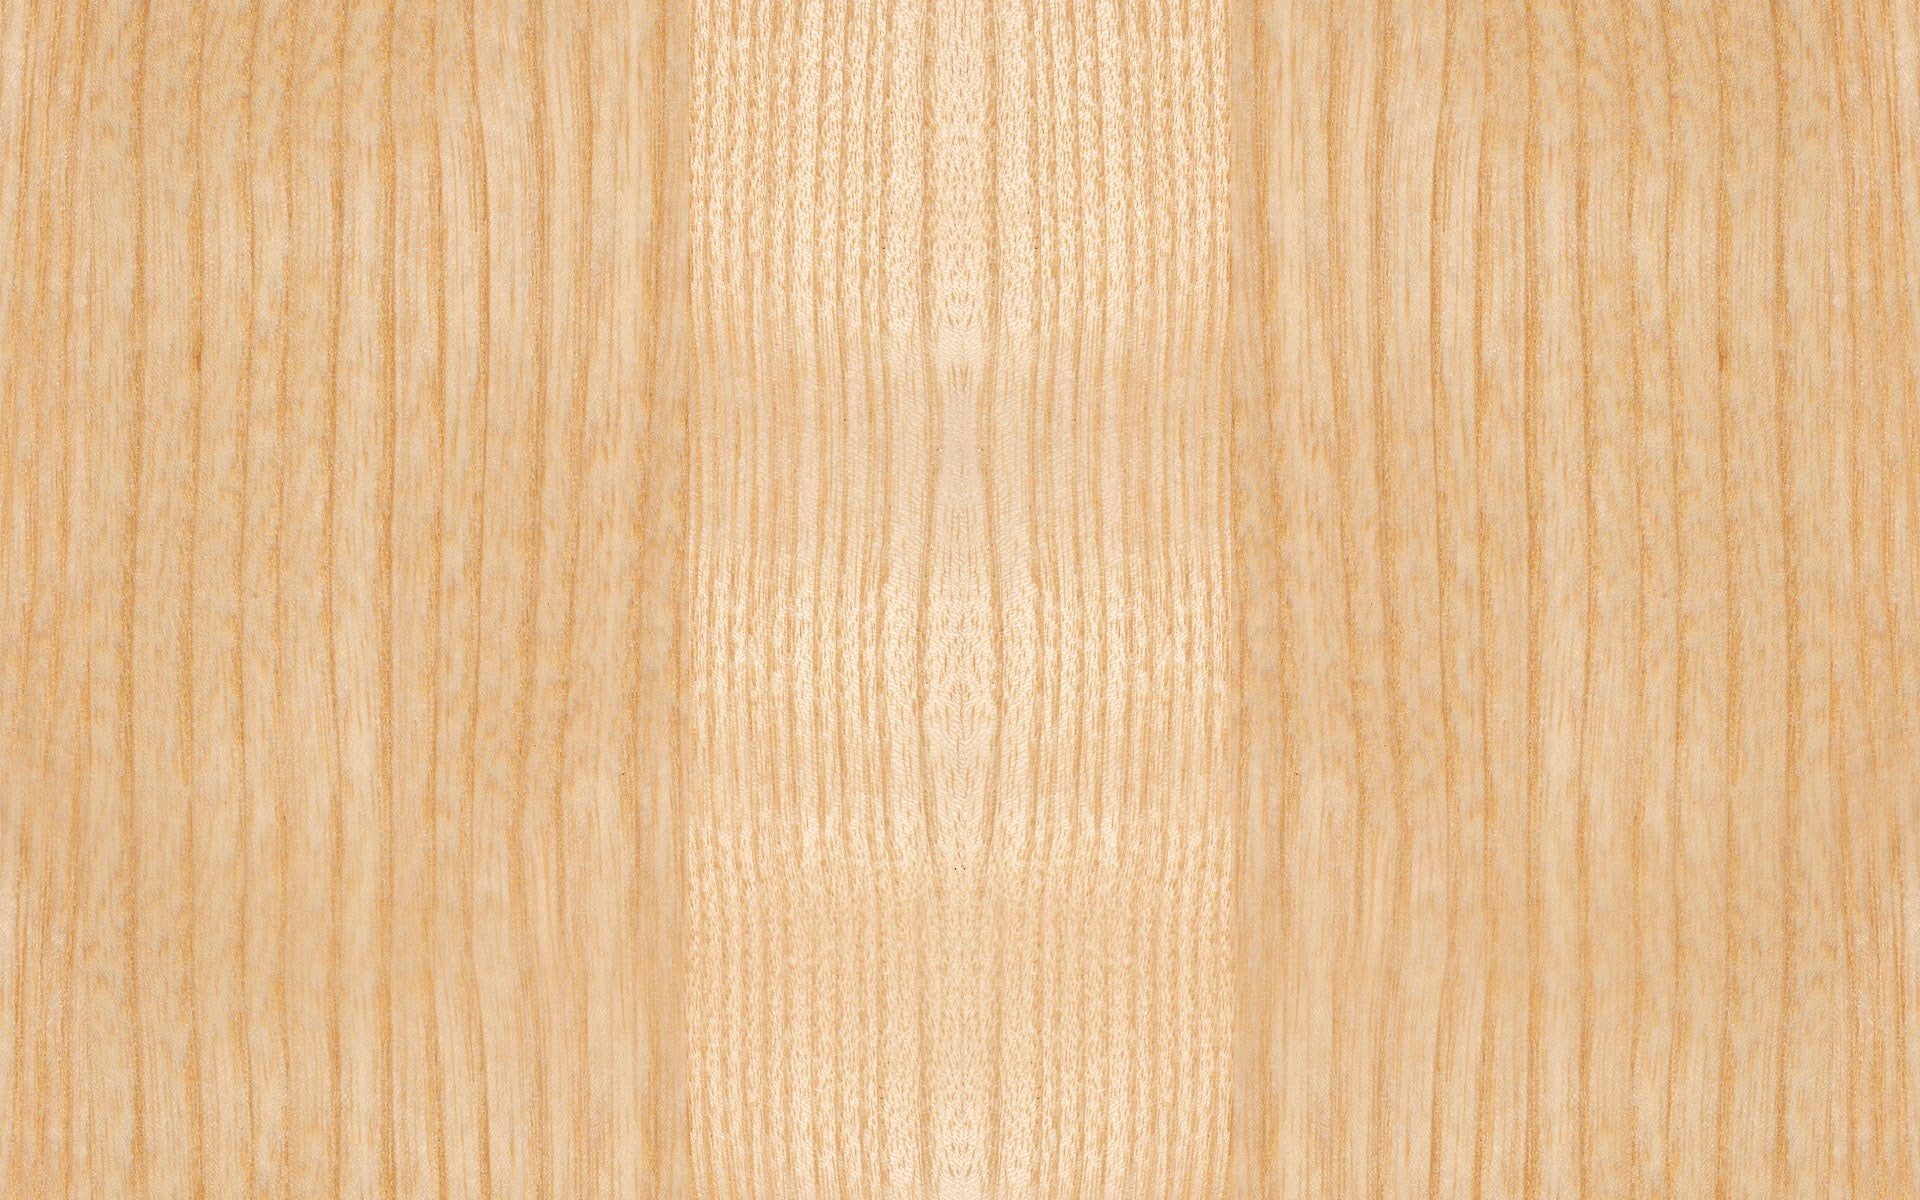 wood  high resolution, wood - material, wood grain, textured